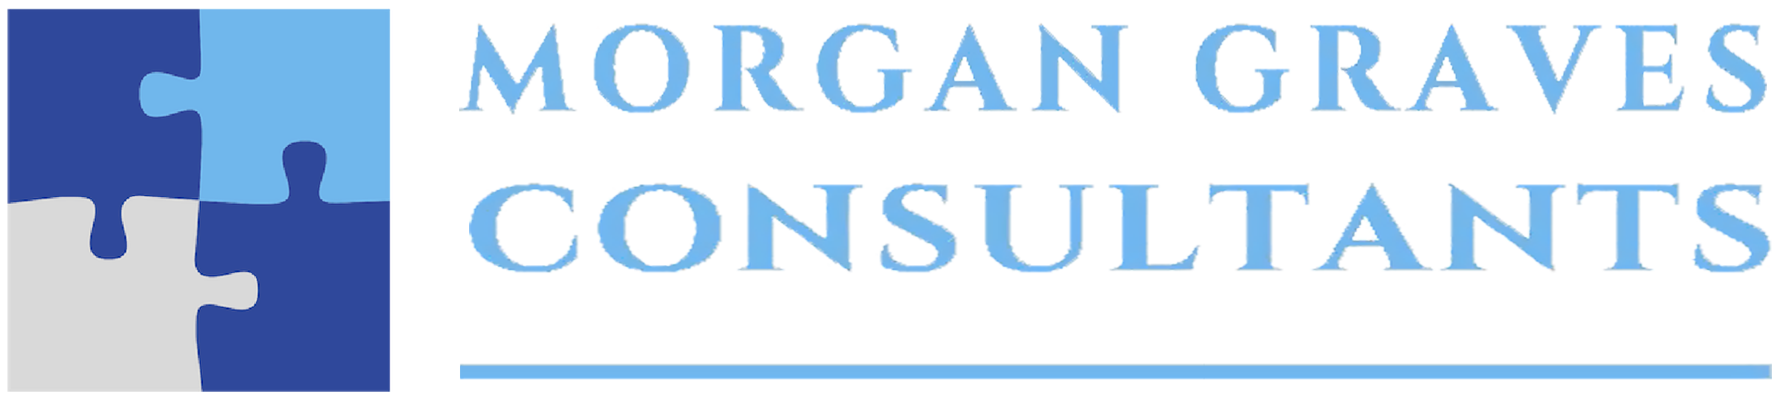 Morgan Graves Consultants